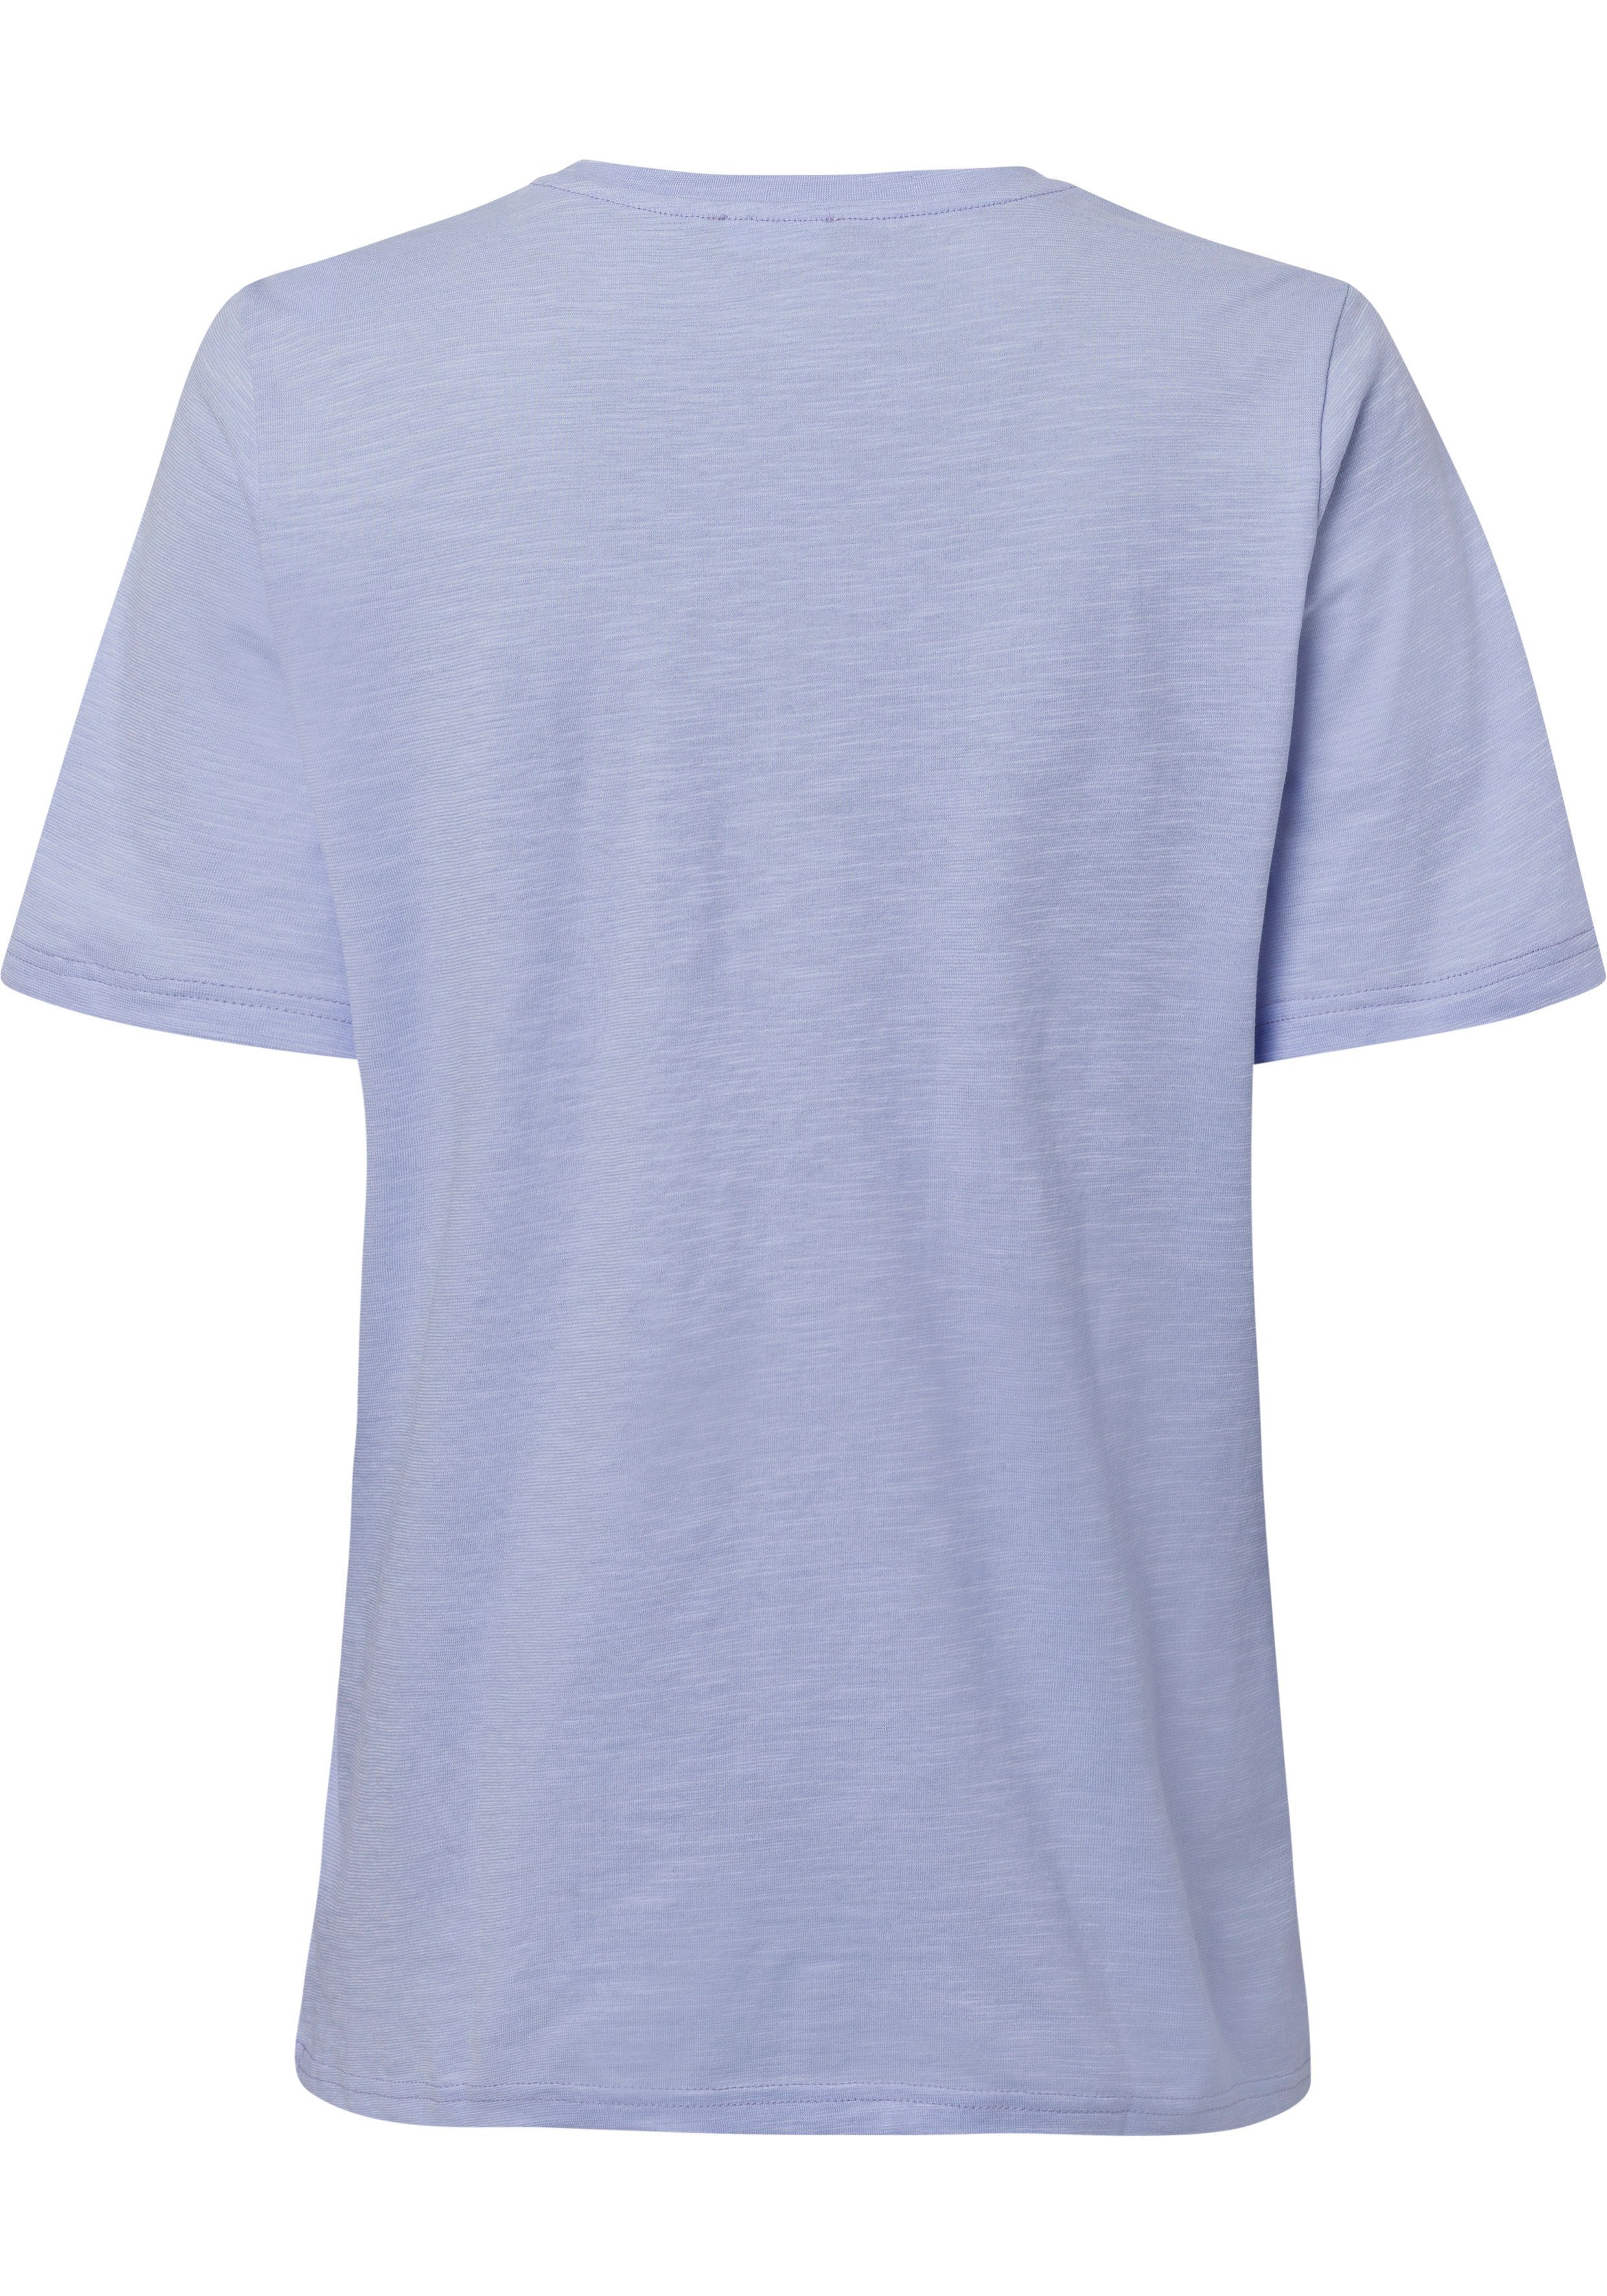 United Colors of Benetton T-Shirt in Basic-Optik cleaner flieder